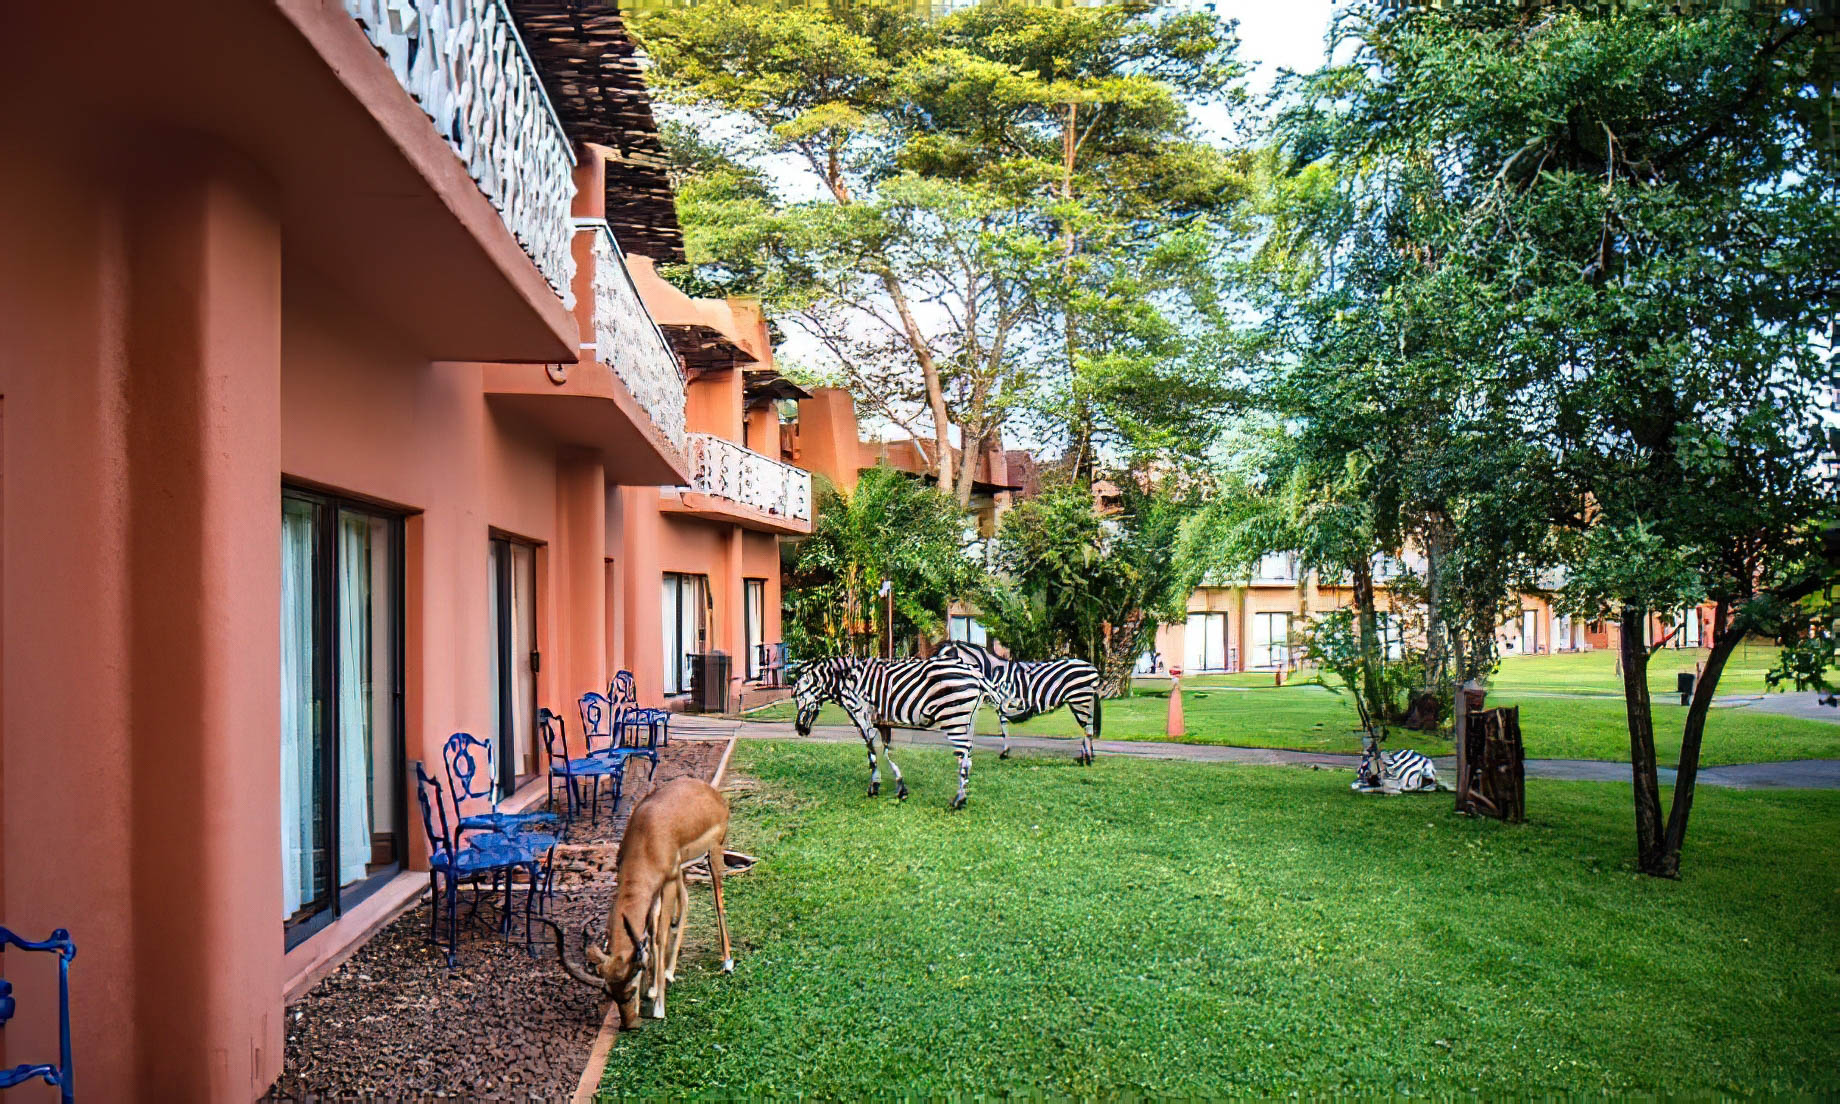 Avani Victoria Falls Resort - Livingstone, Zambia - Zebra